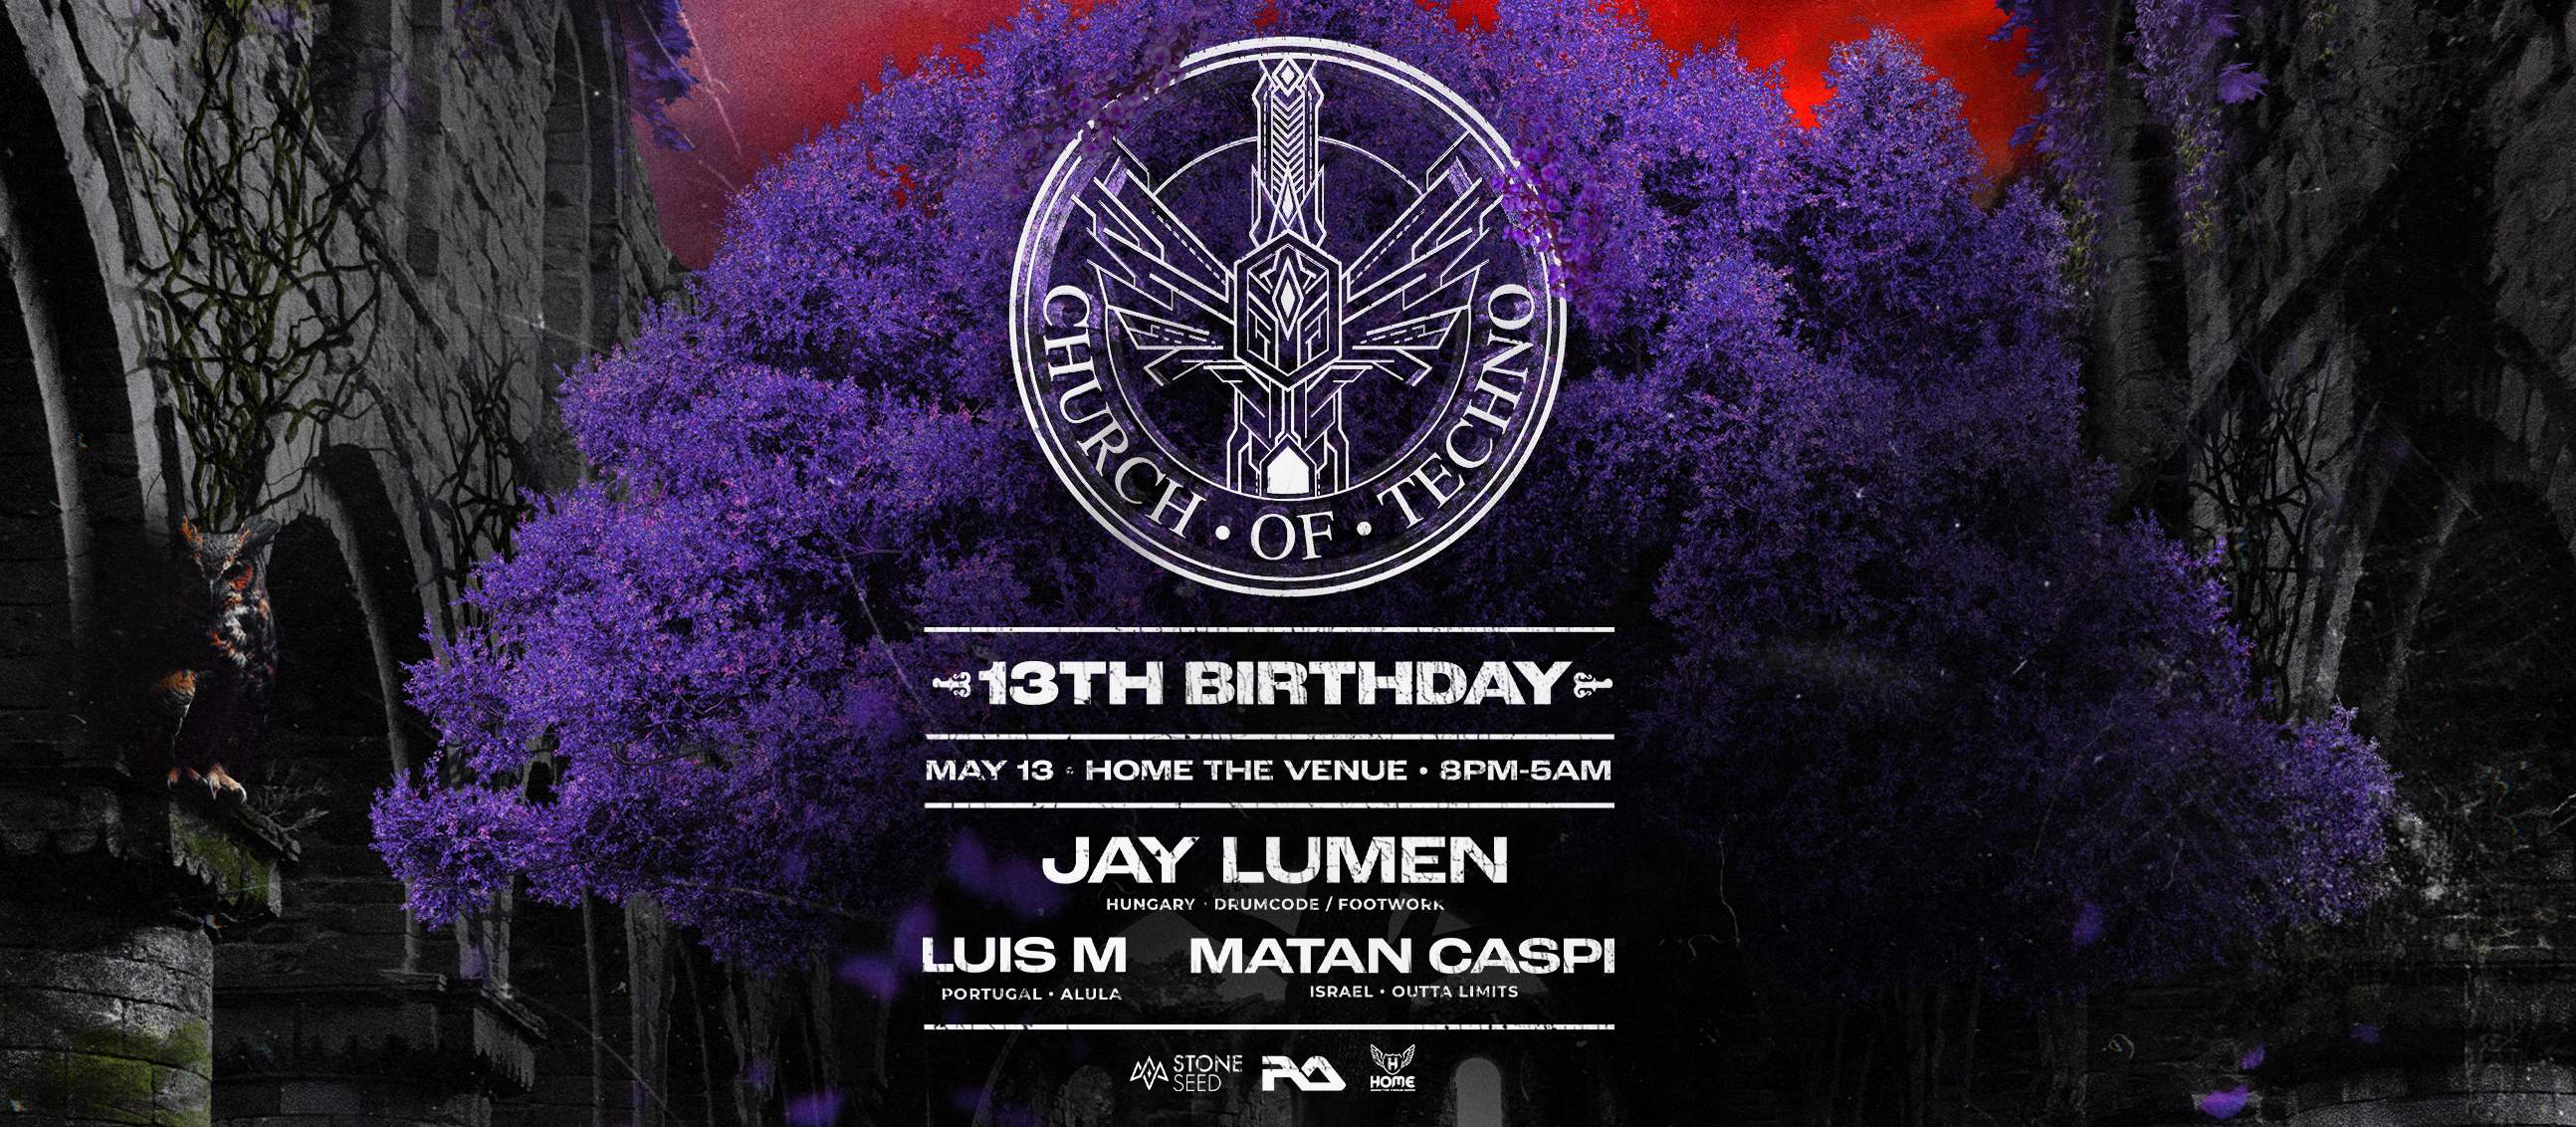 Church of Techno - 13th Birthday ft. JAY LUMEN, LUIS M, MATAN CASPI - フライヤー表